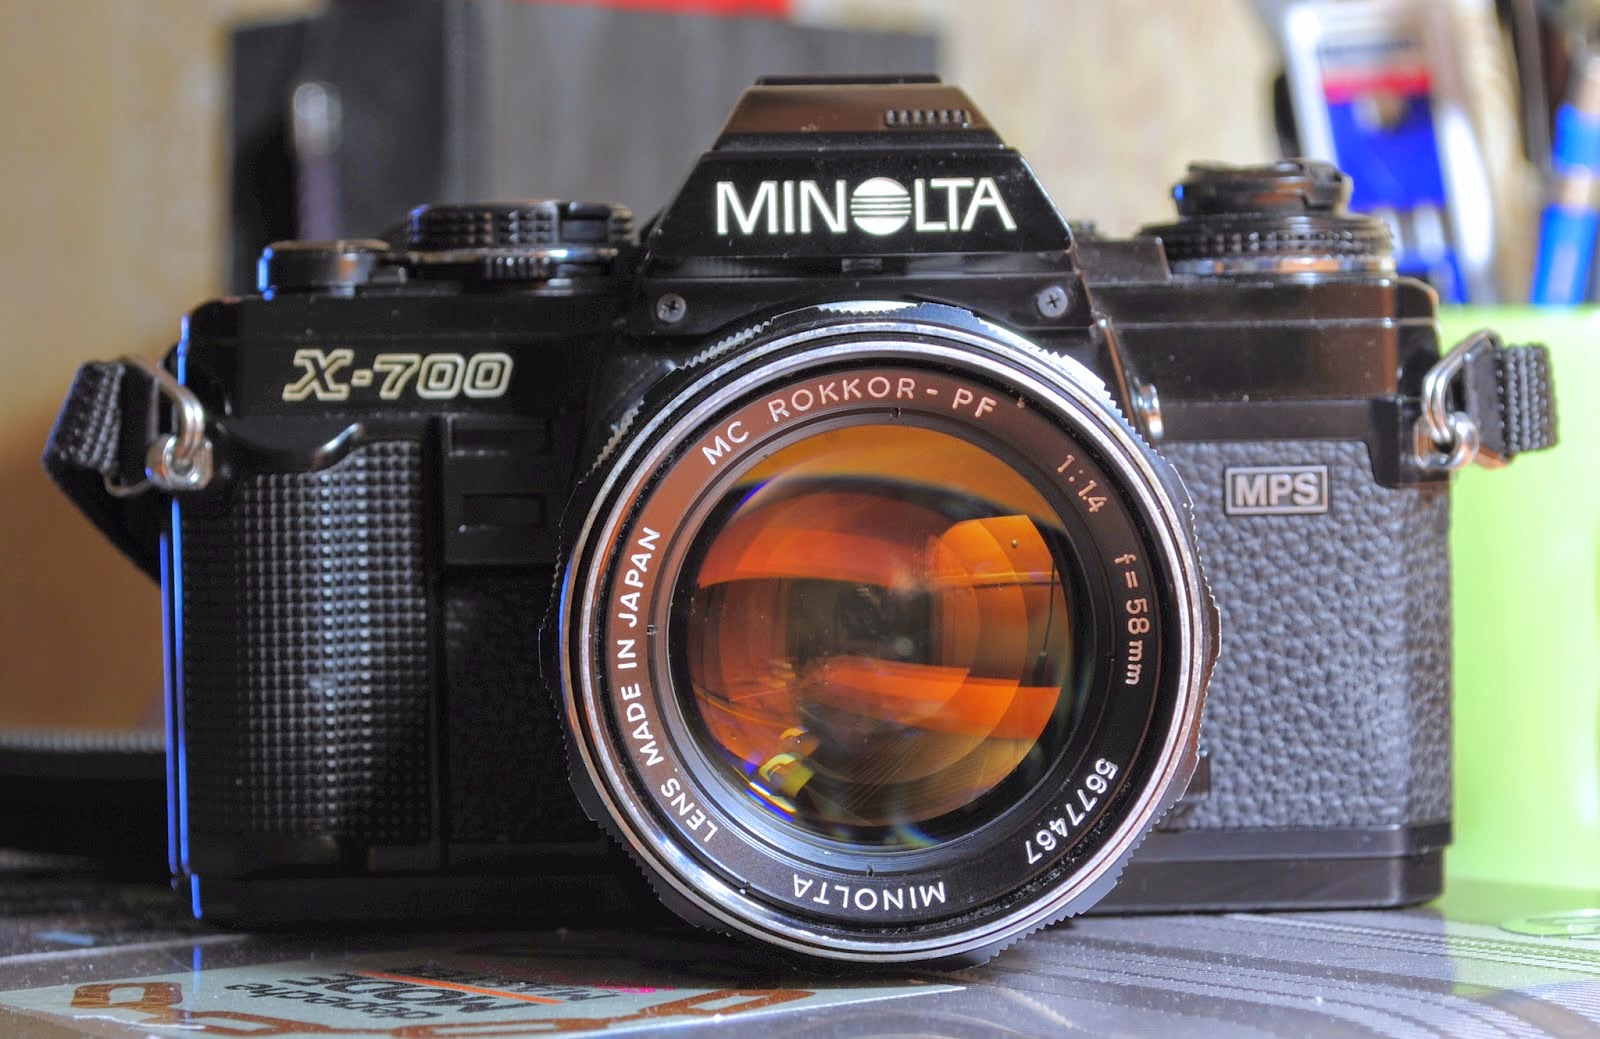 Felix G Photography: My First Film Camera, Minolta X-700